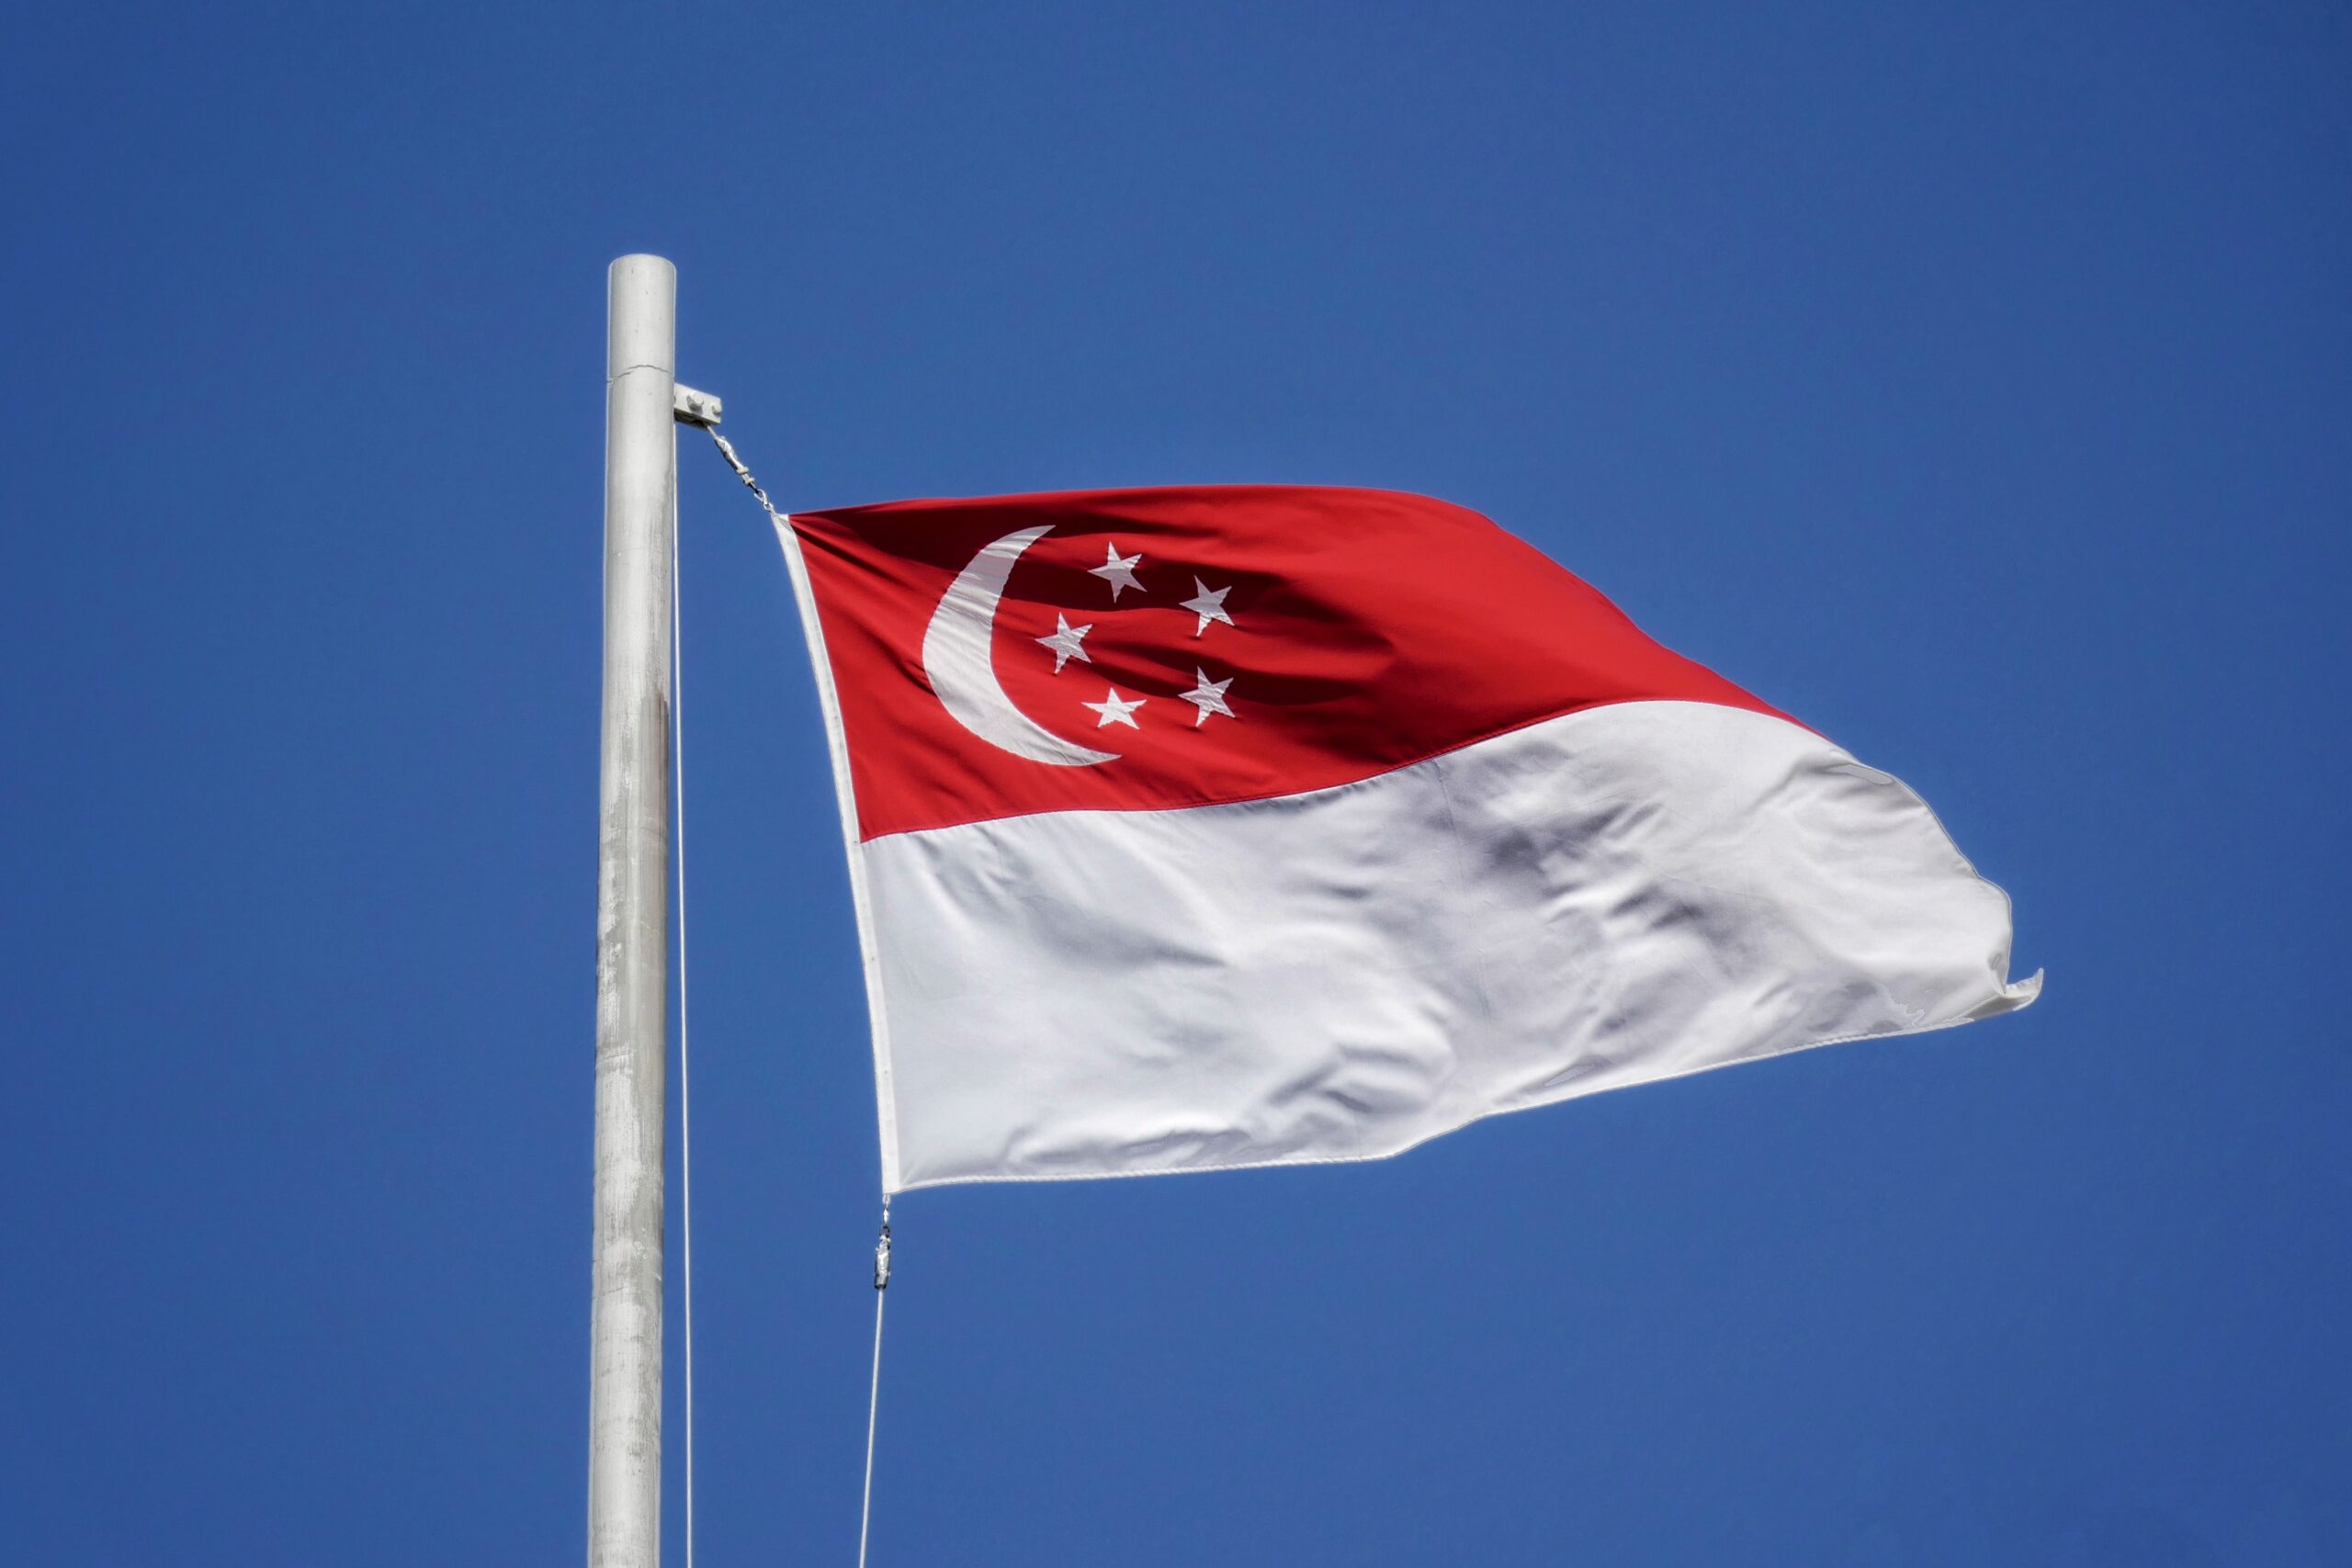 List of 3 renewable energy investors from Singapore